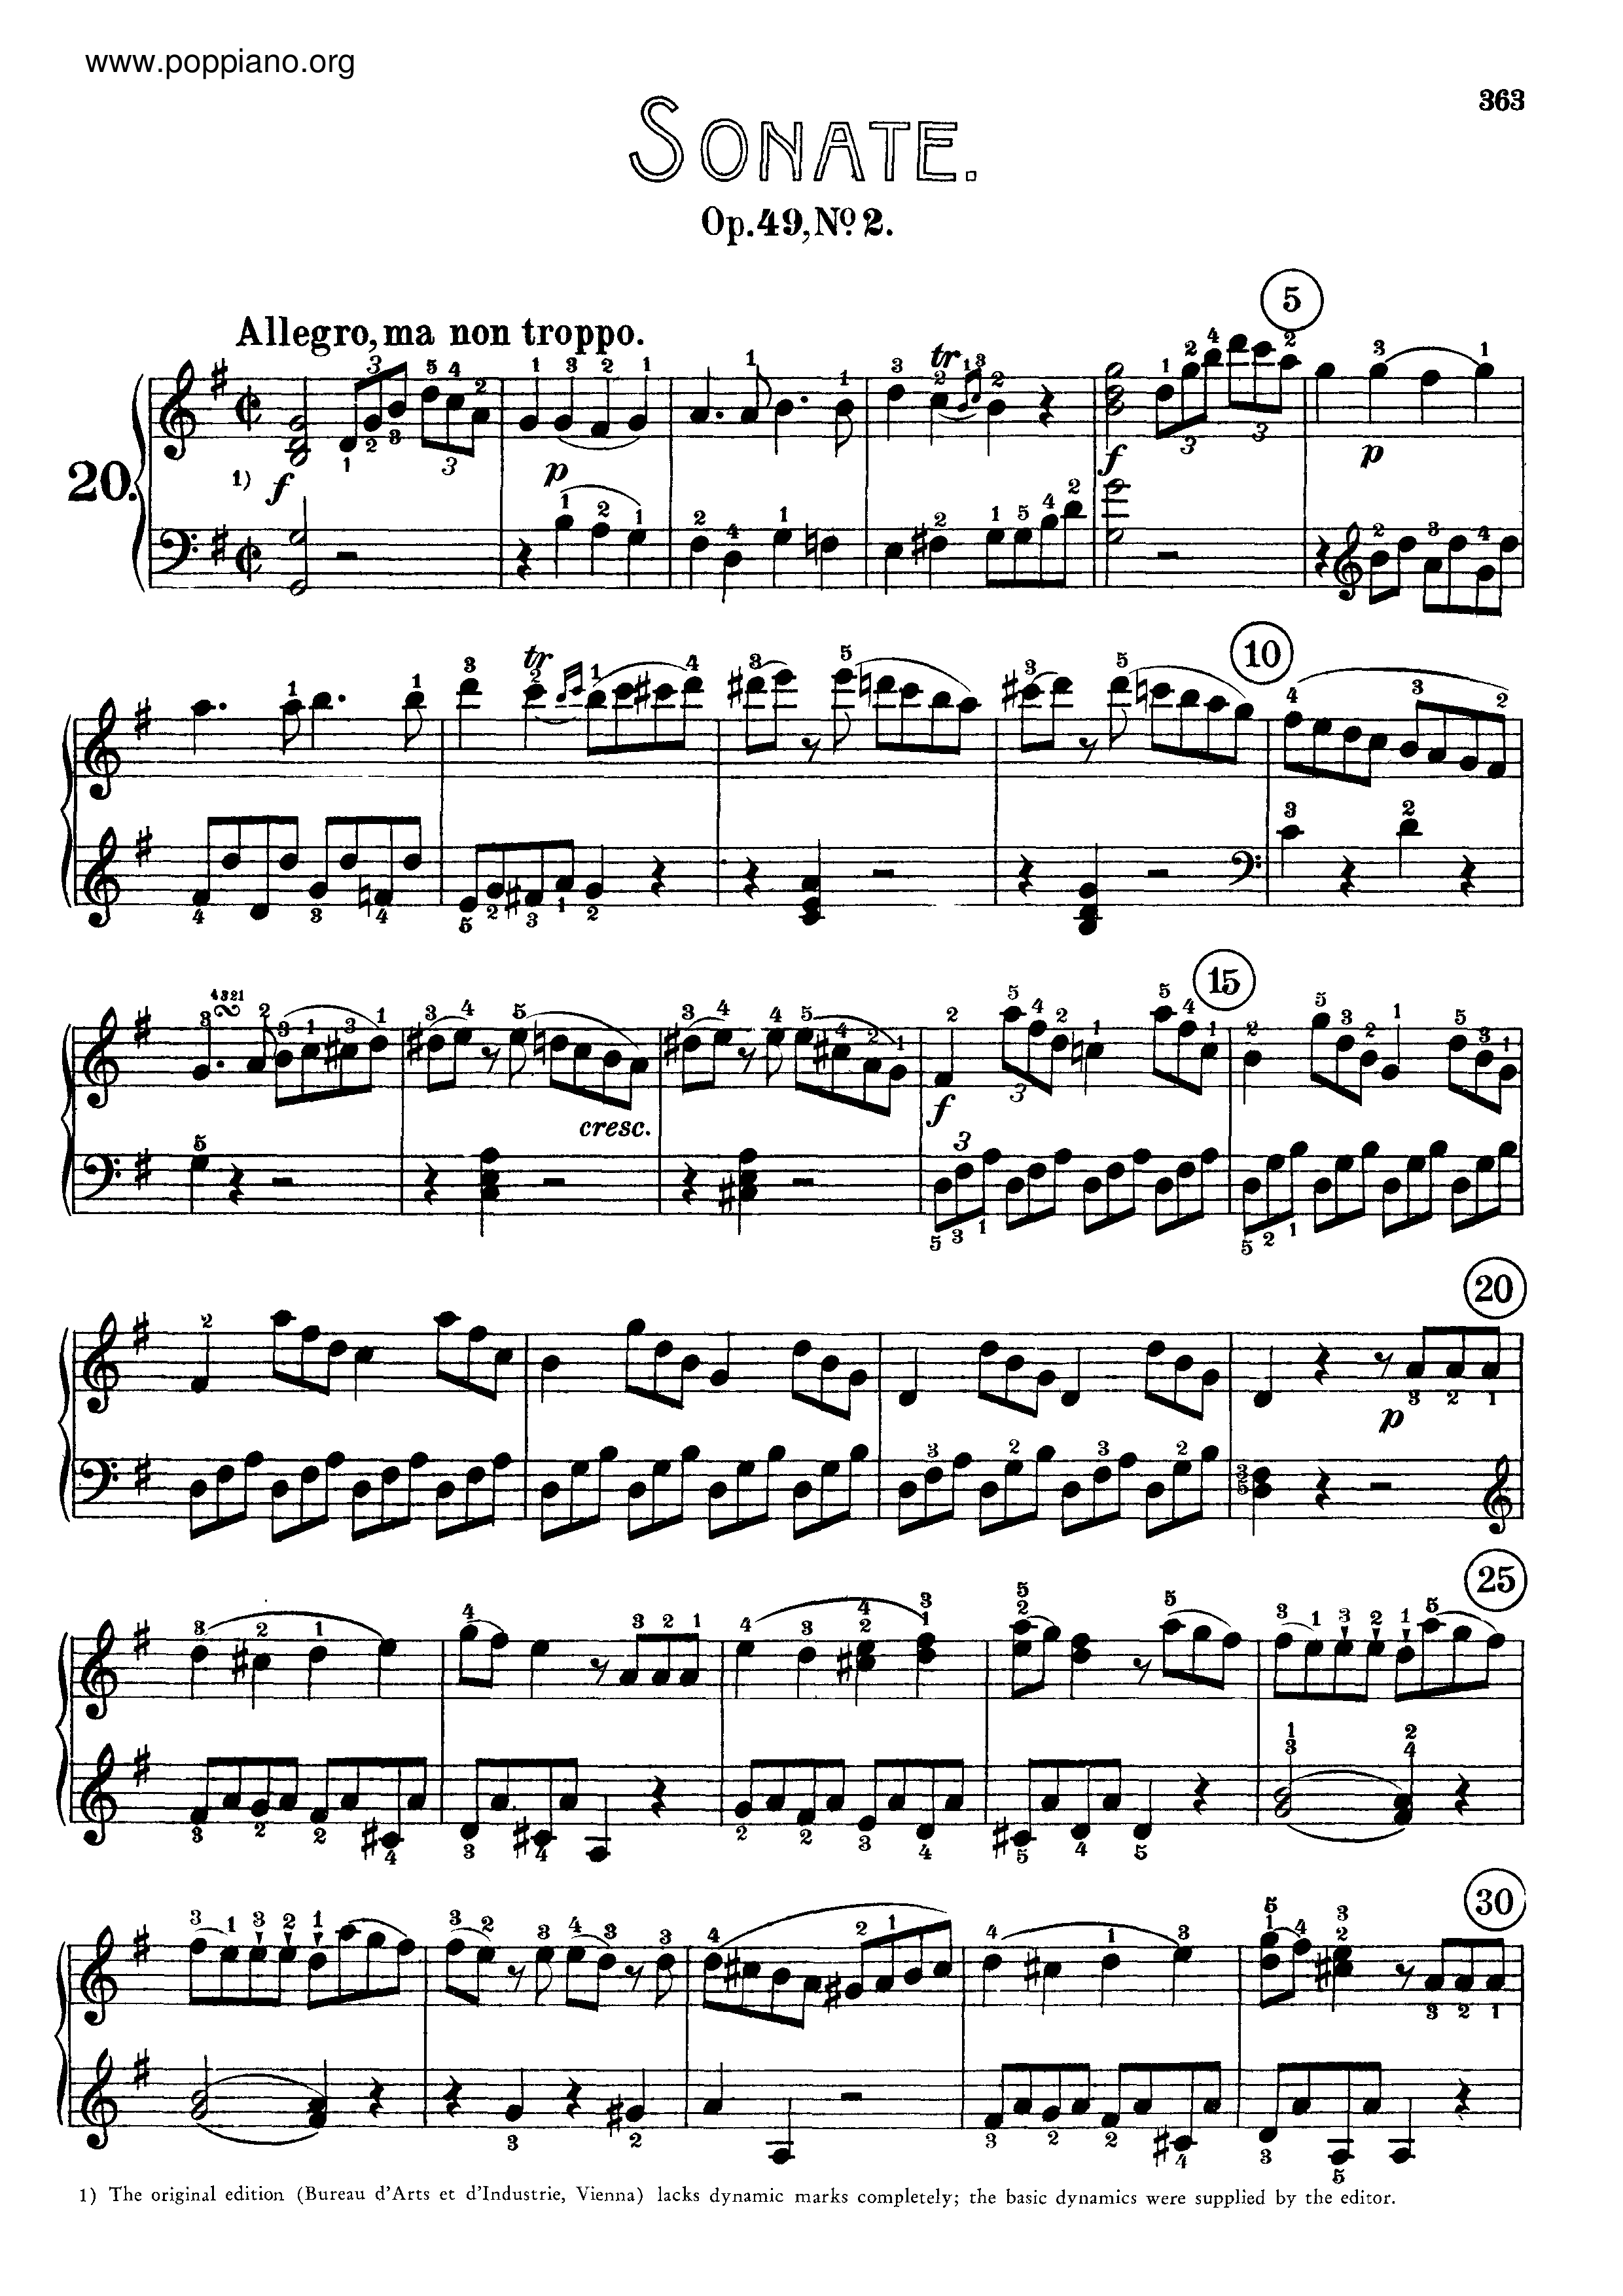 Sonata No. 20 in G majorピアノ譜